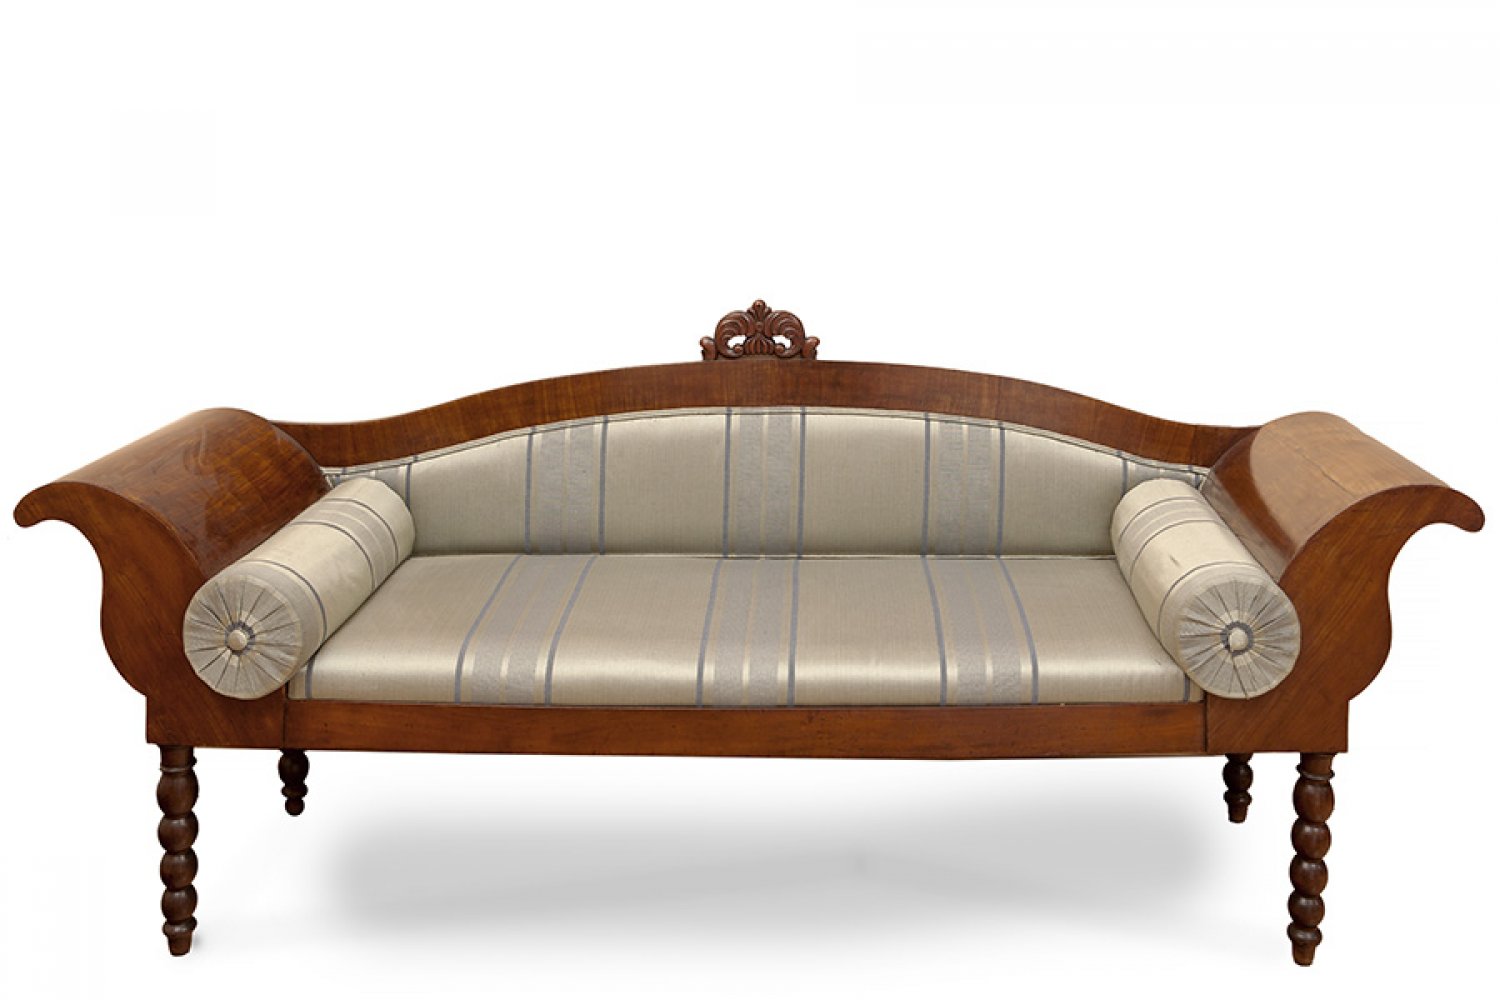 Fernandino bench; Spain, early 20th century.Walnut or oak wood with silk upholstery.Measurements: 93